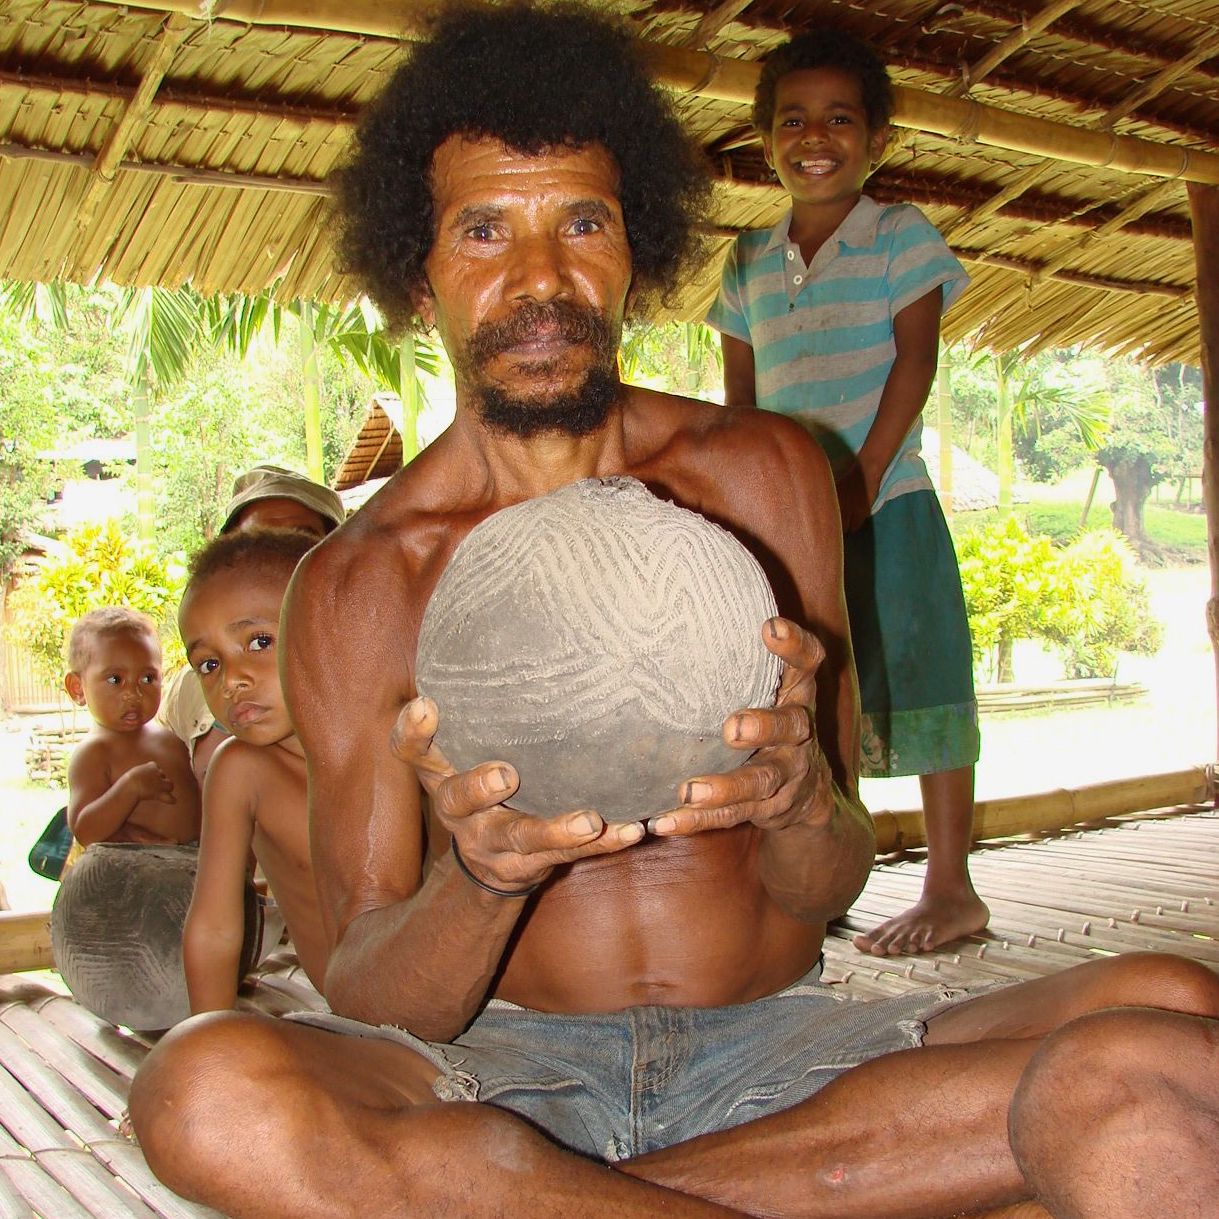 Clay Pot, Collingwood Bay, Oro Province, New Guinea Art, Oceanic Art, Tribal Art, South Pacific Art